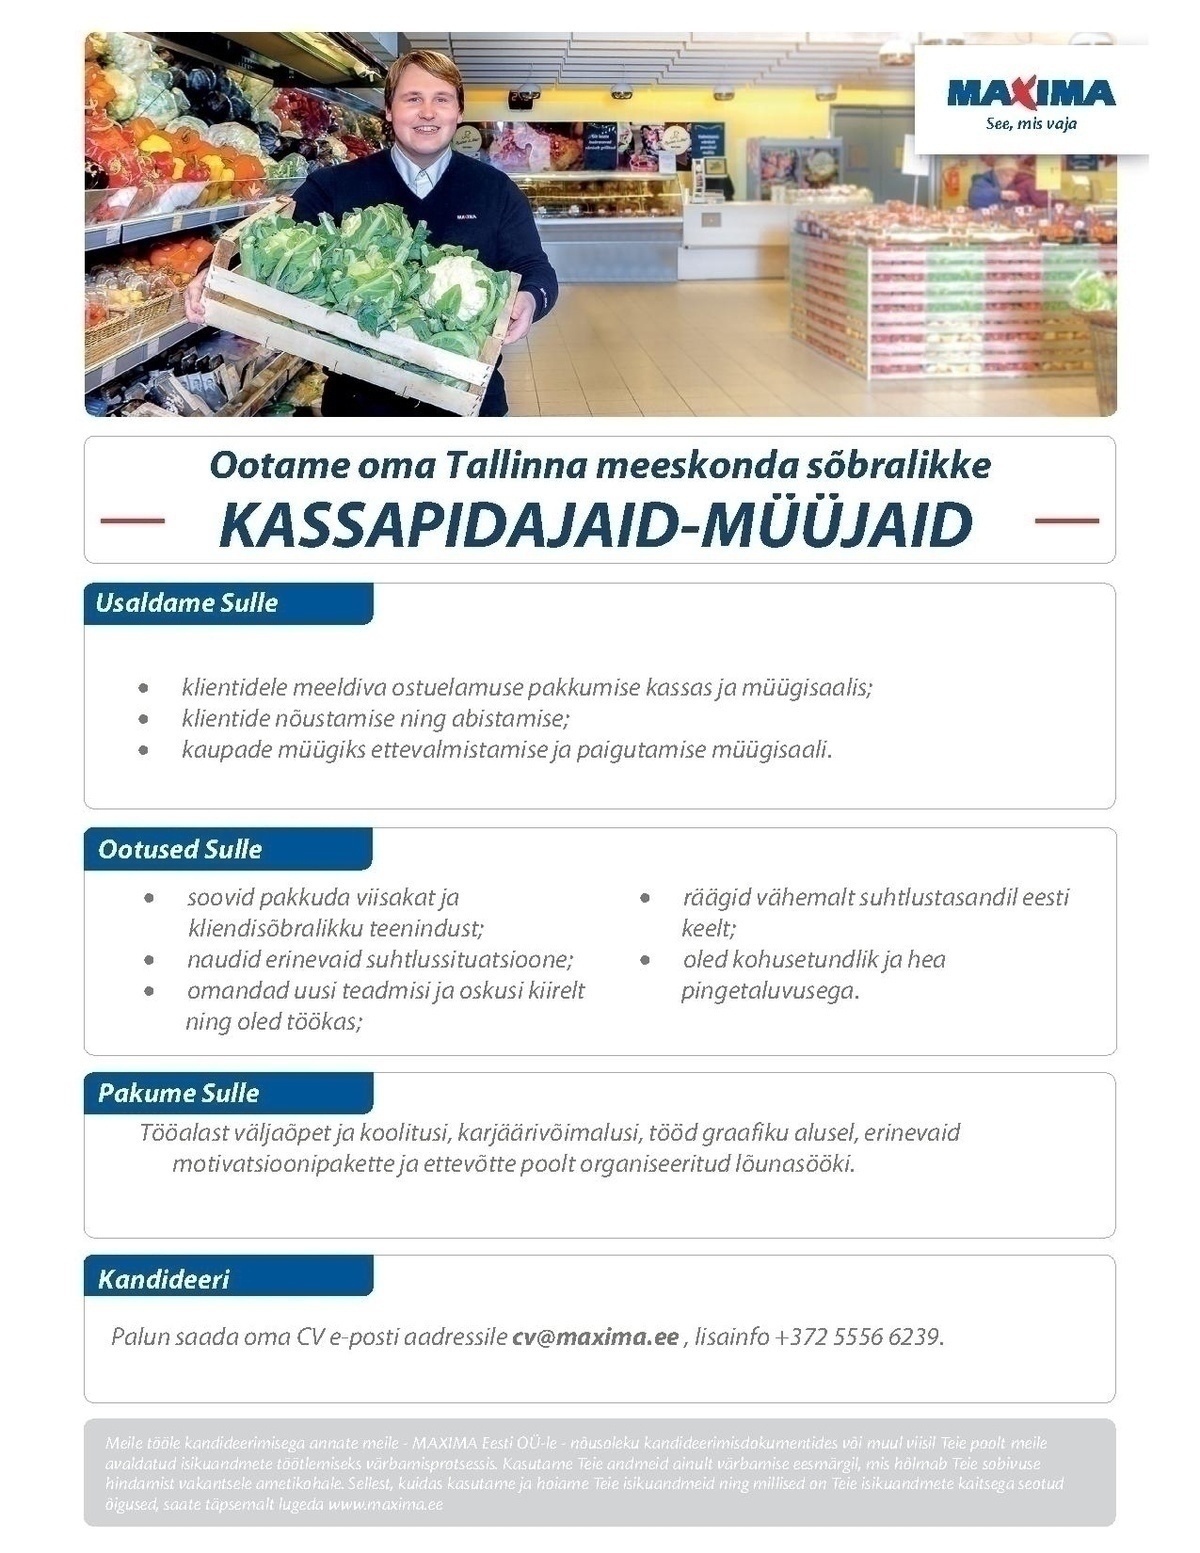 Maxima Eesti OÜ Kassapidaja-müüja Lasnamäe Maximas, Smuuli 9